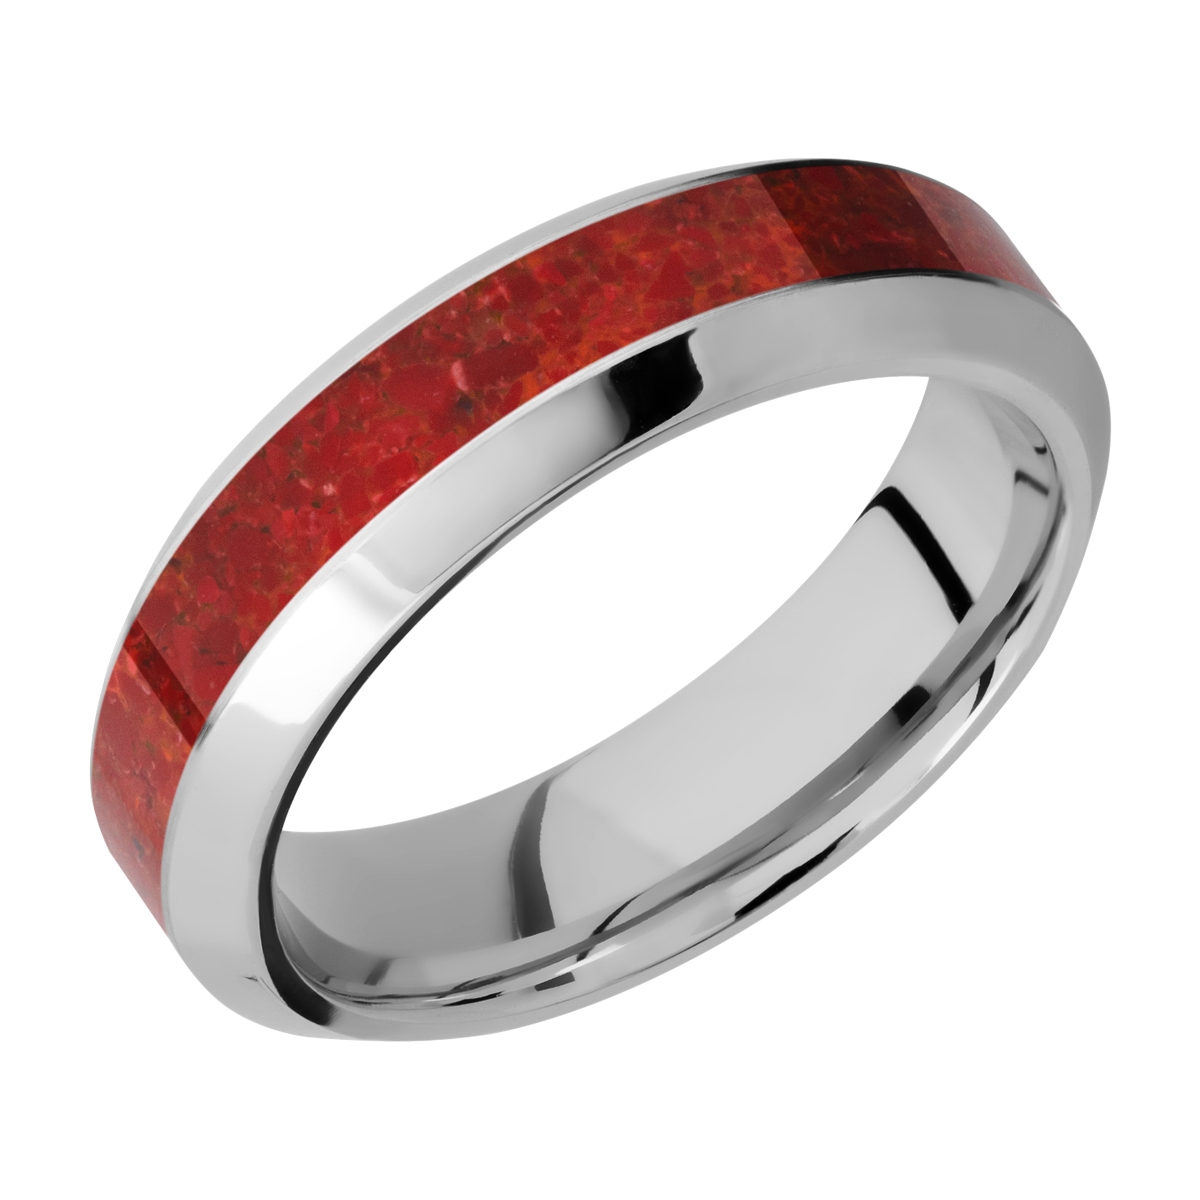 Lashbrook CC5HB12/MOSAIC Cobalt Chrome Wedding Ring or Band